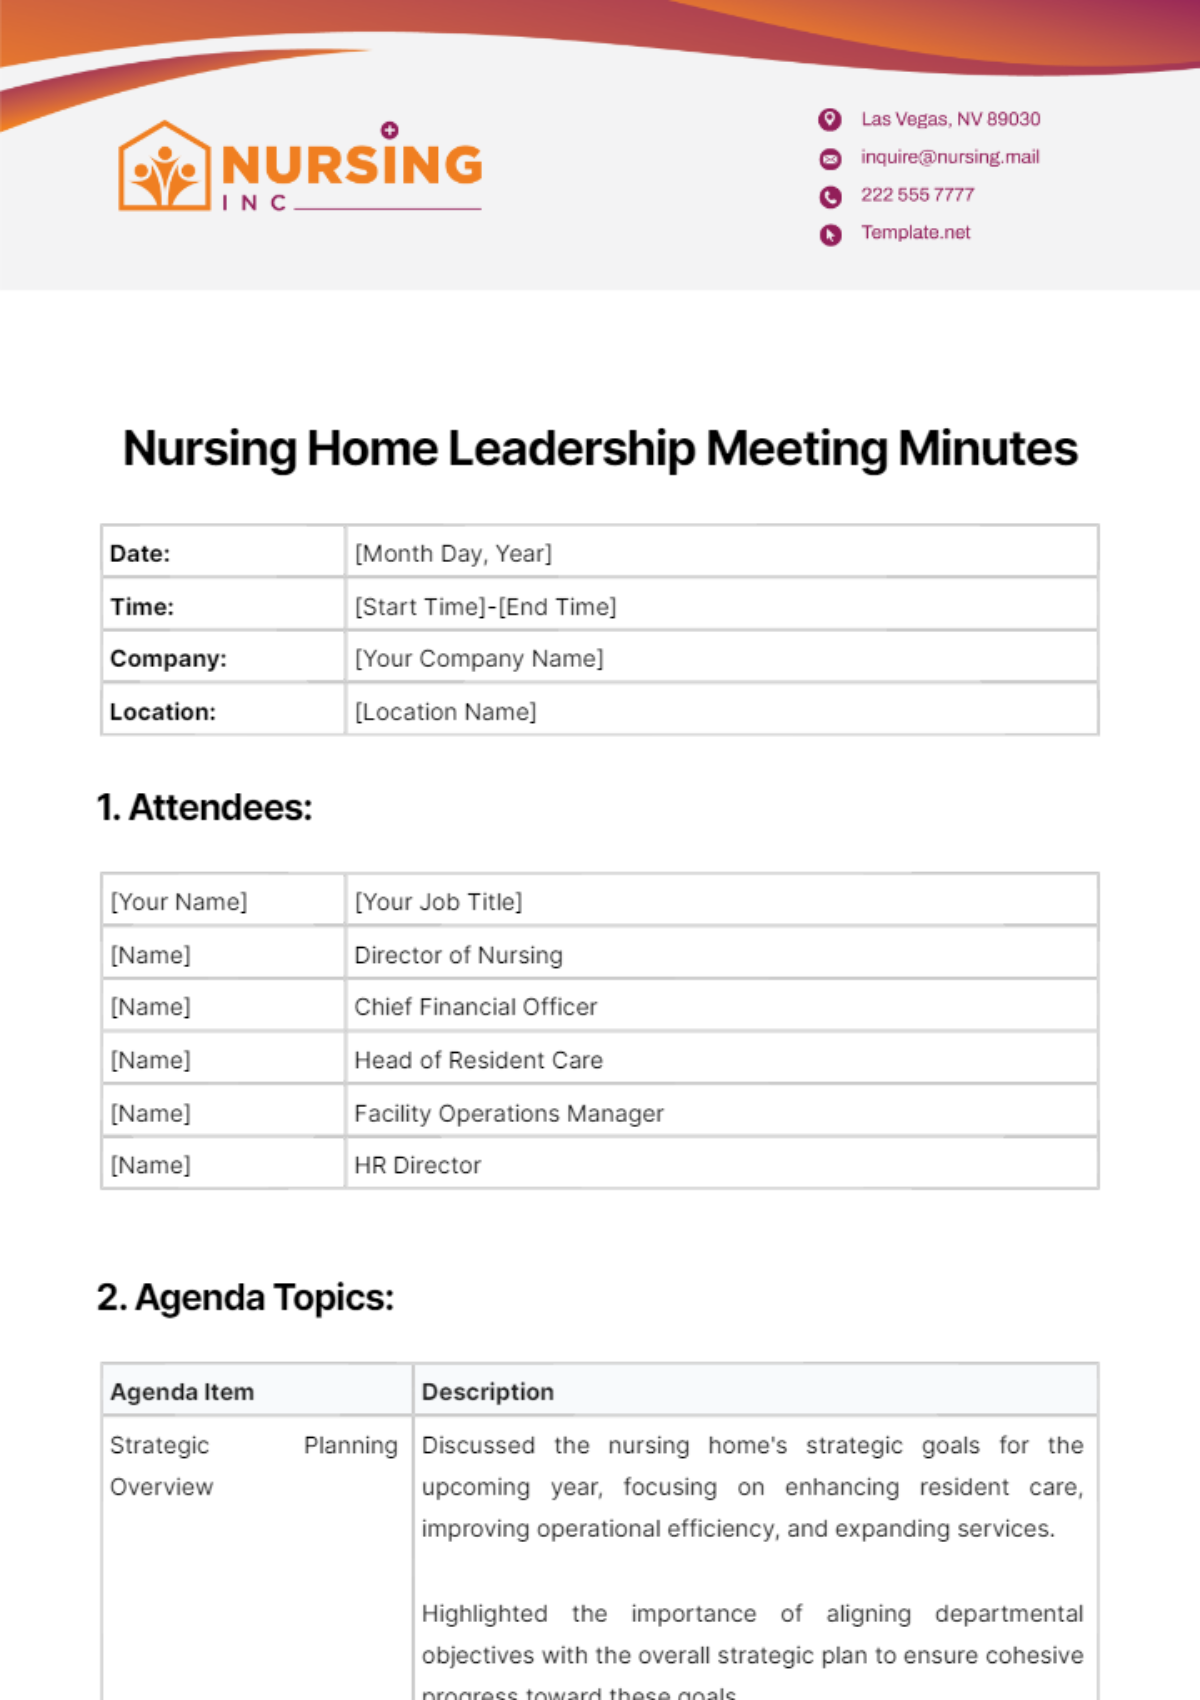 Nursing Home Leadership Meeting Minutes Template